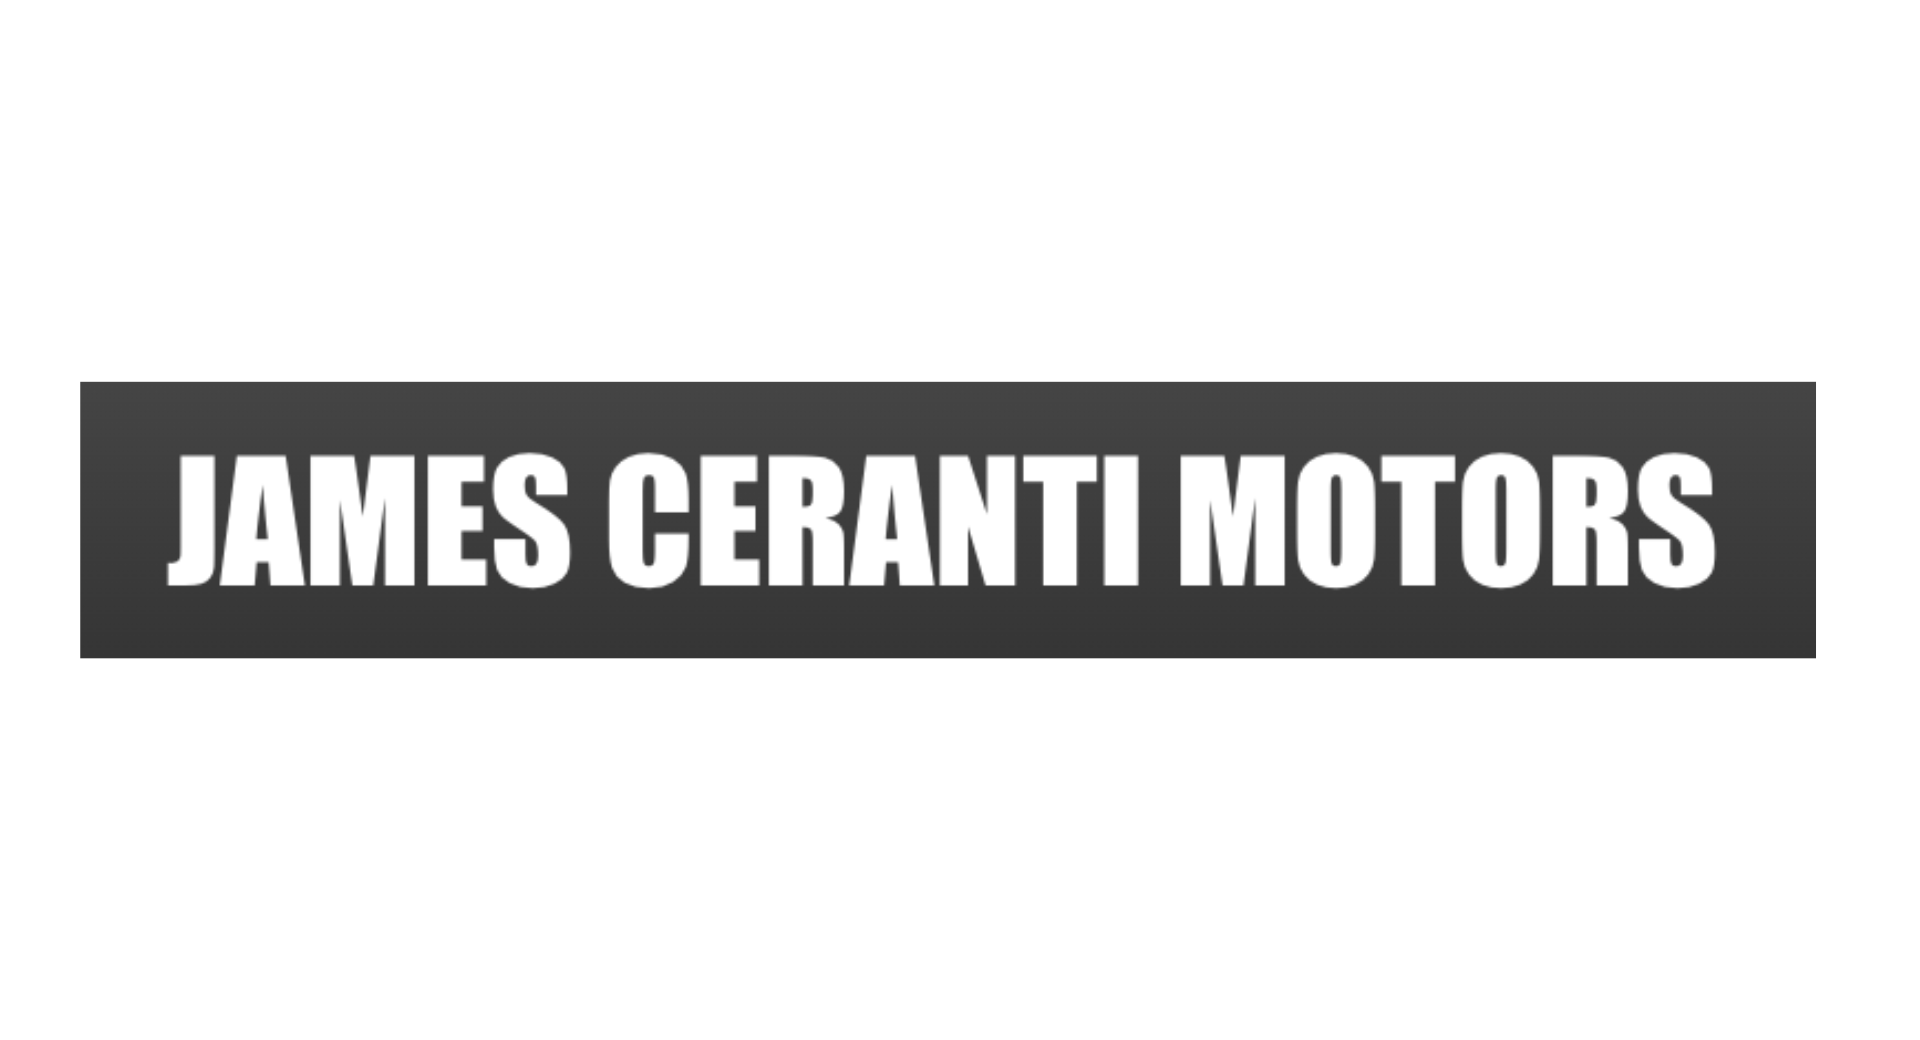 James Ceranti Motors is a Certified Agriculture Dealership.